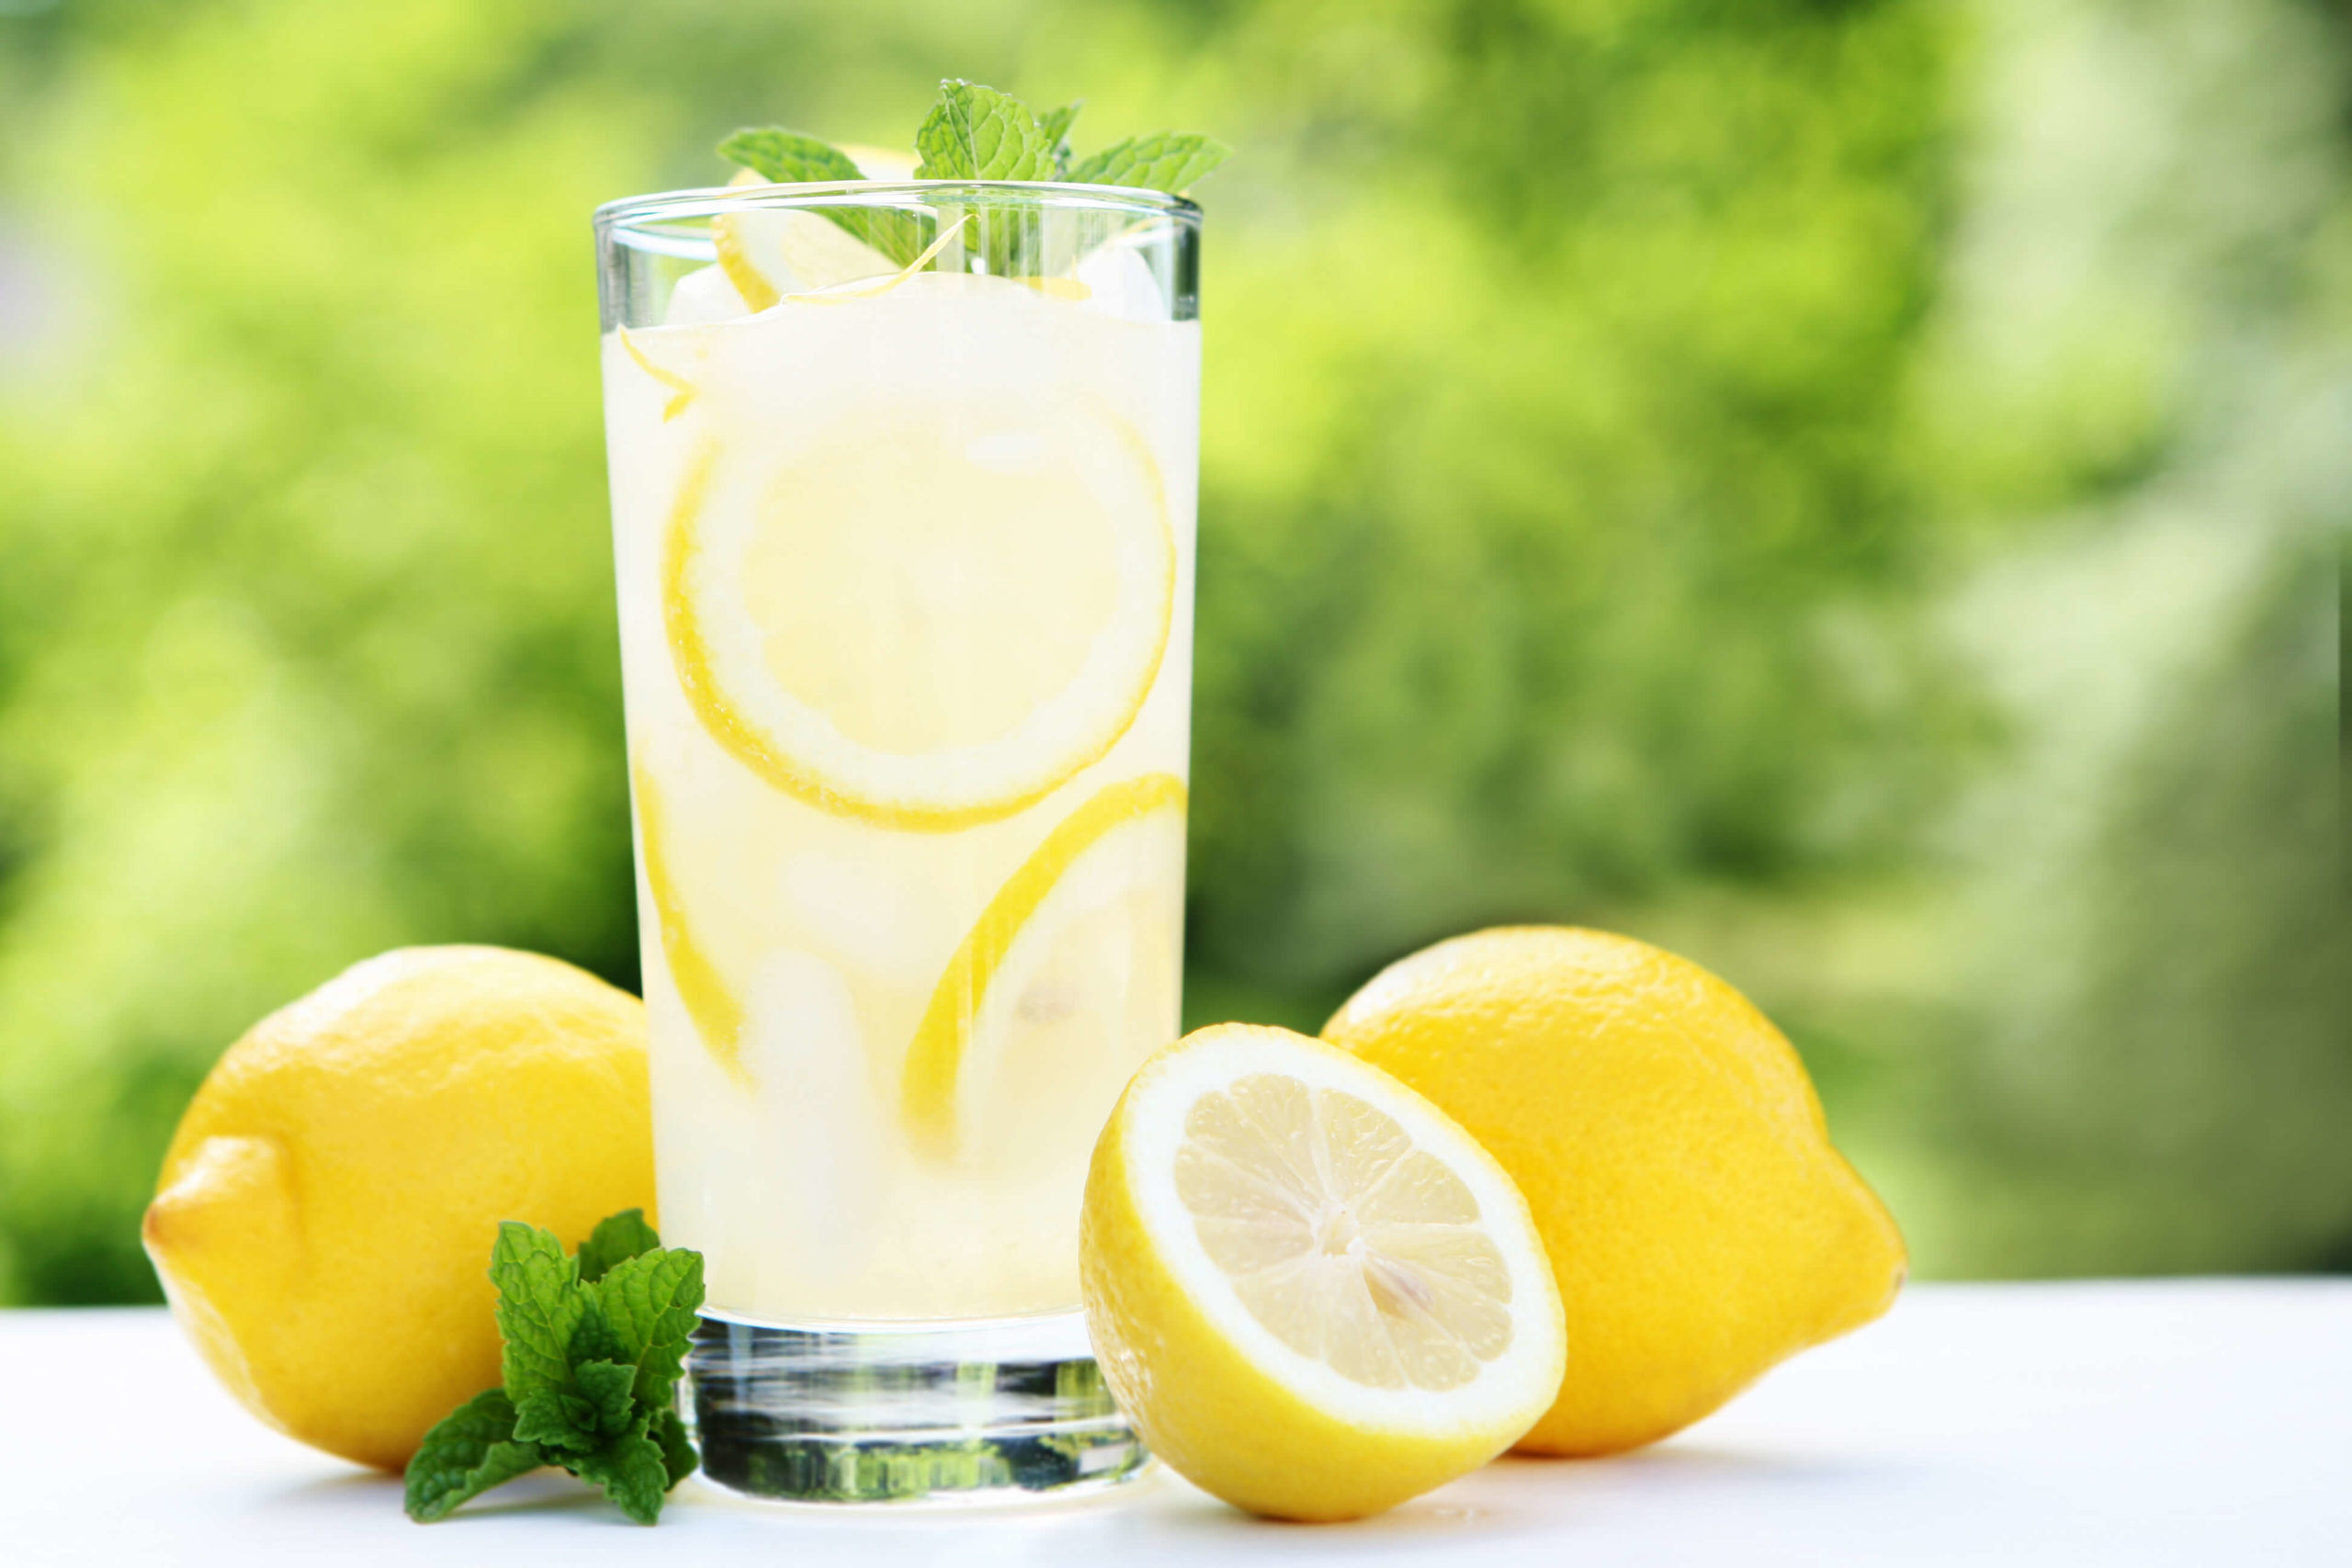 Tall glass of lemonade with fresh lemons next to the glass.